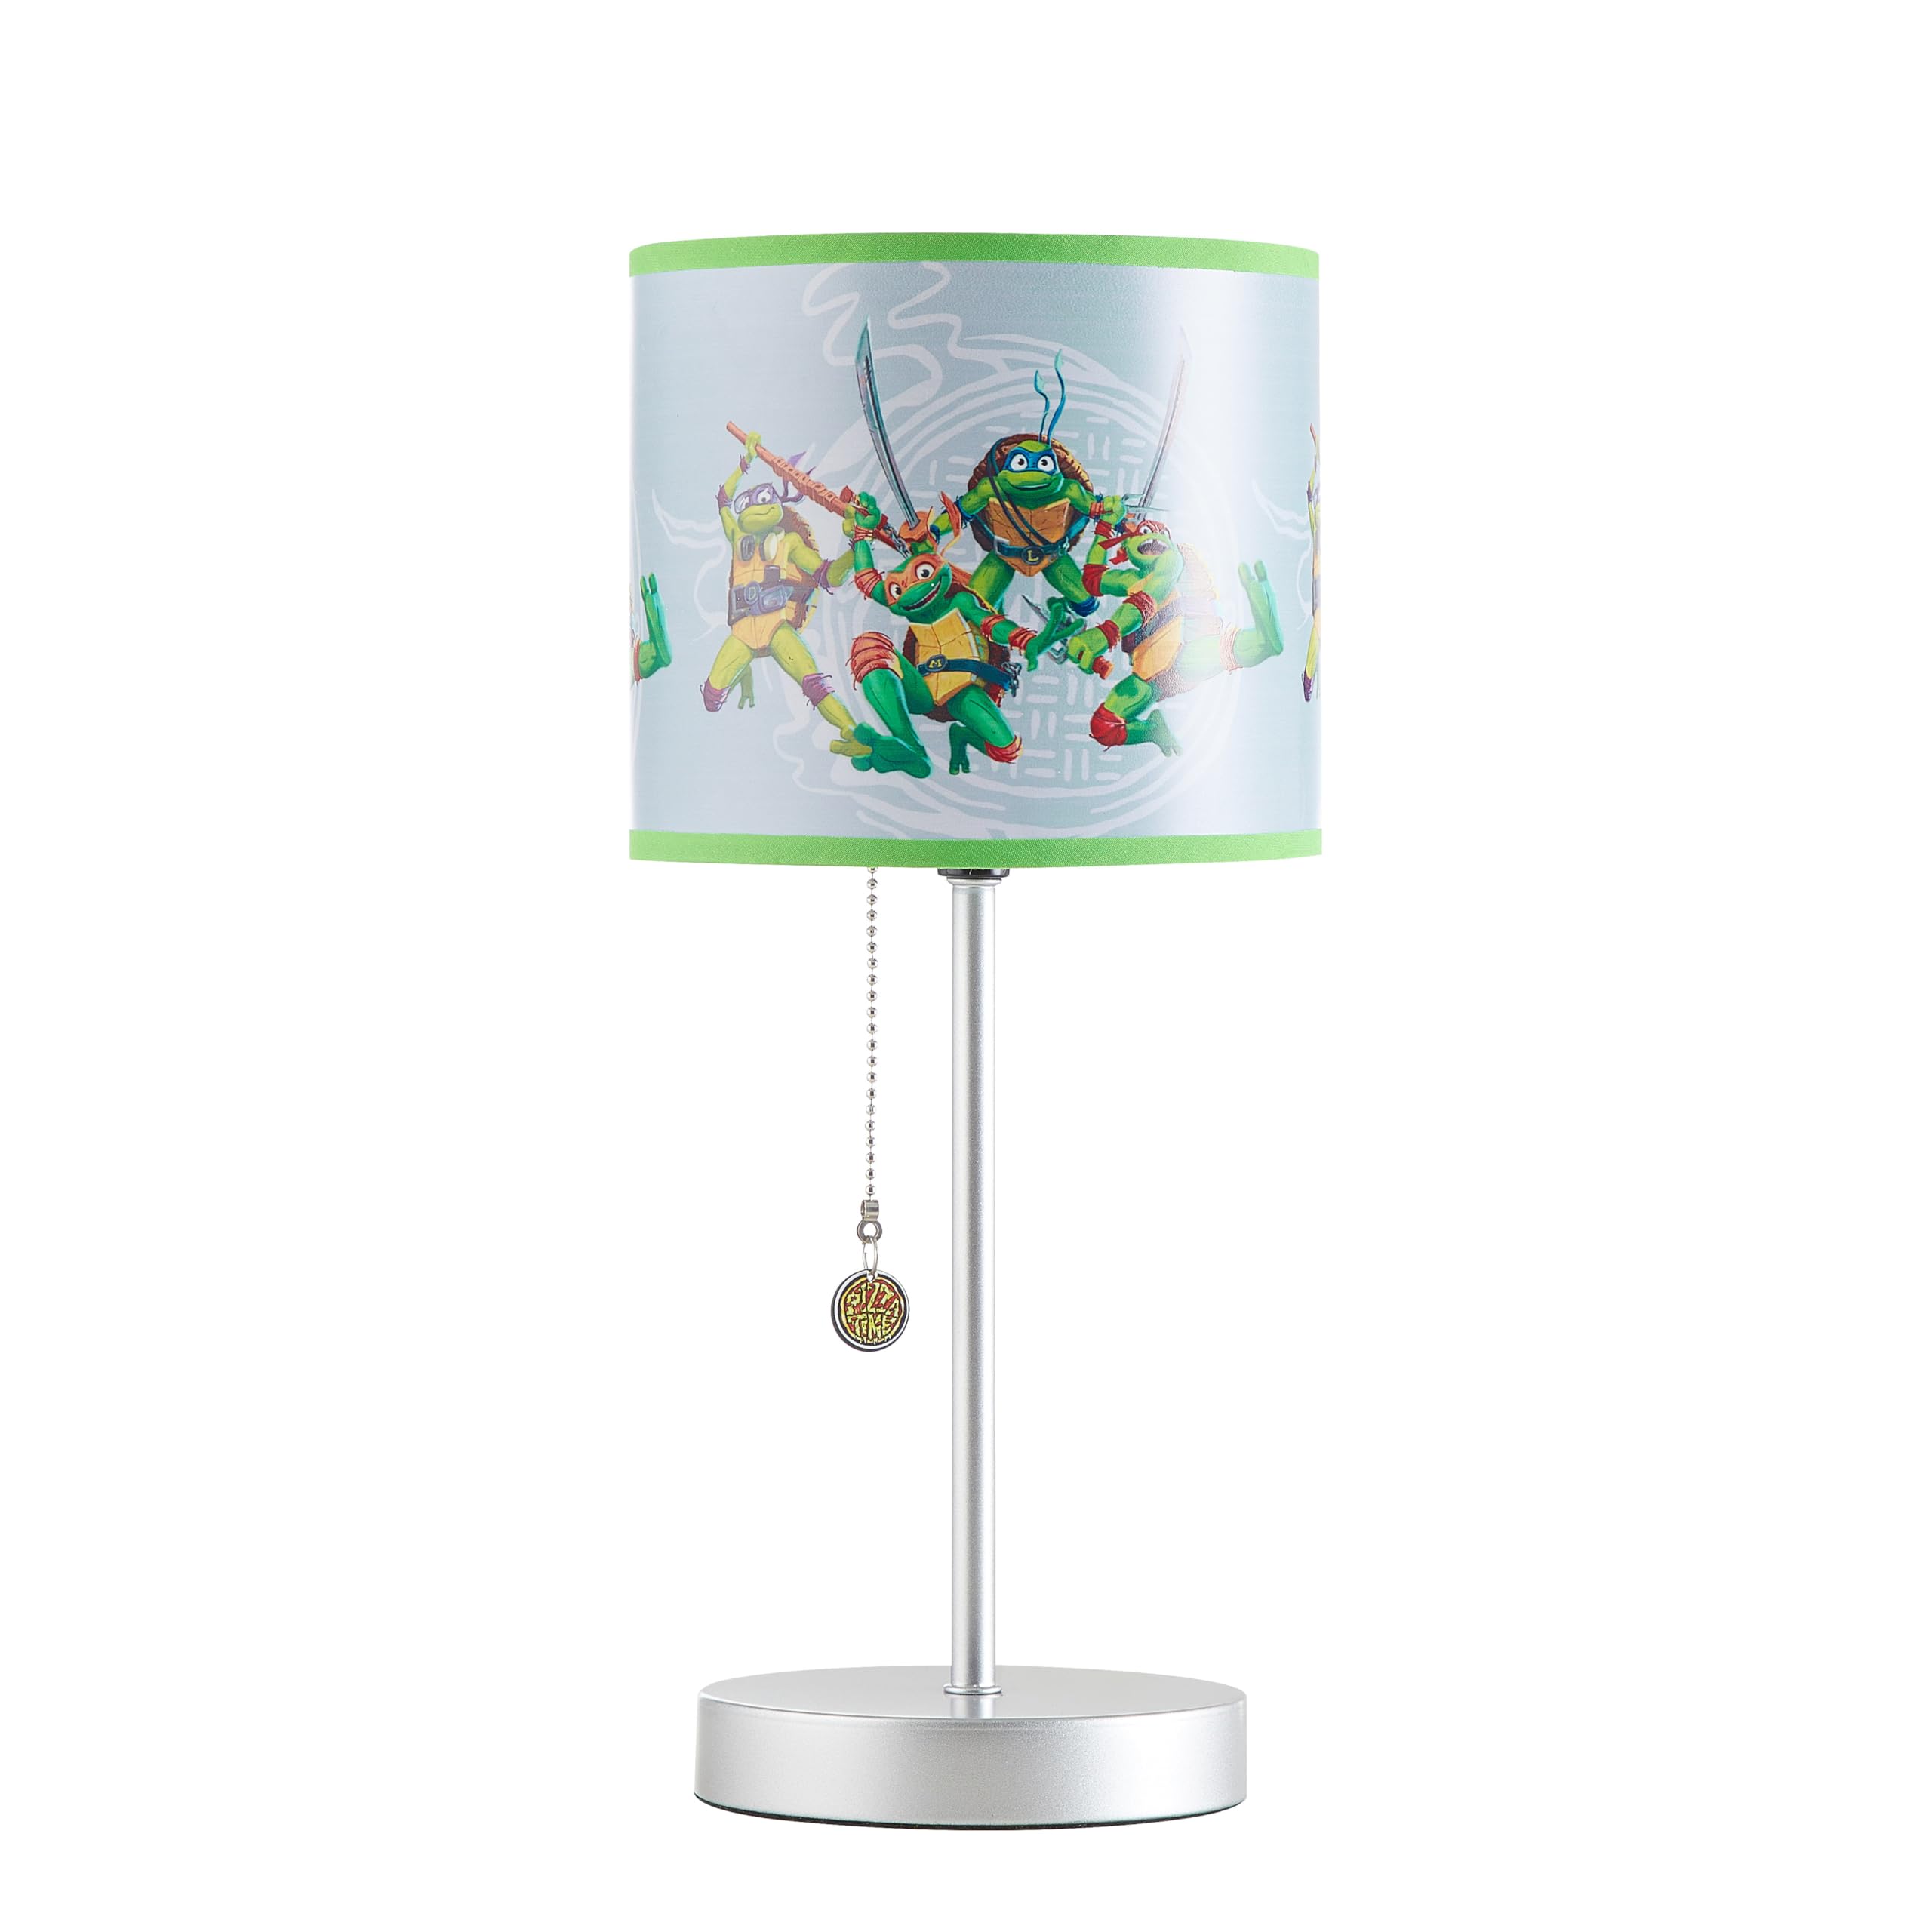 Idea Nuova Teenage Mutant Ninja Turtle: Mutant Mayhem Stick Table Kids Lamp with Pull Chain, Themed Printed Decorative Shade